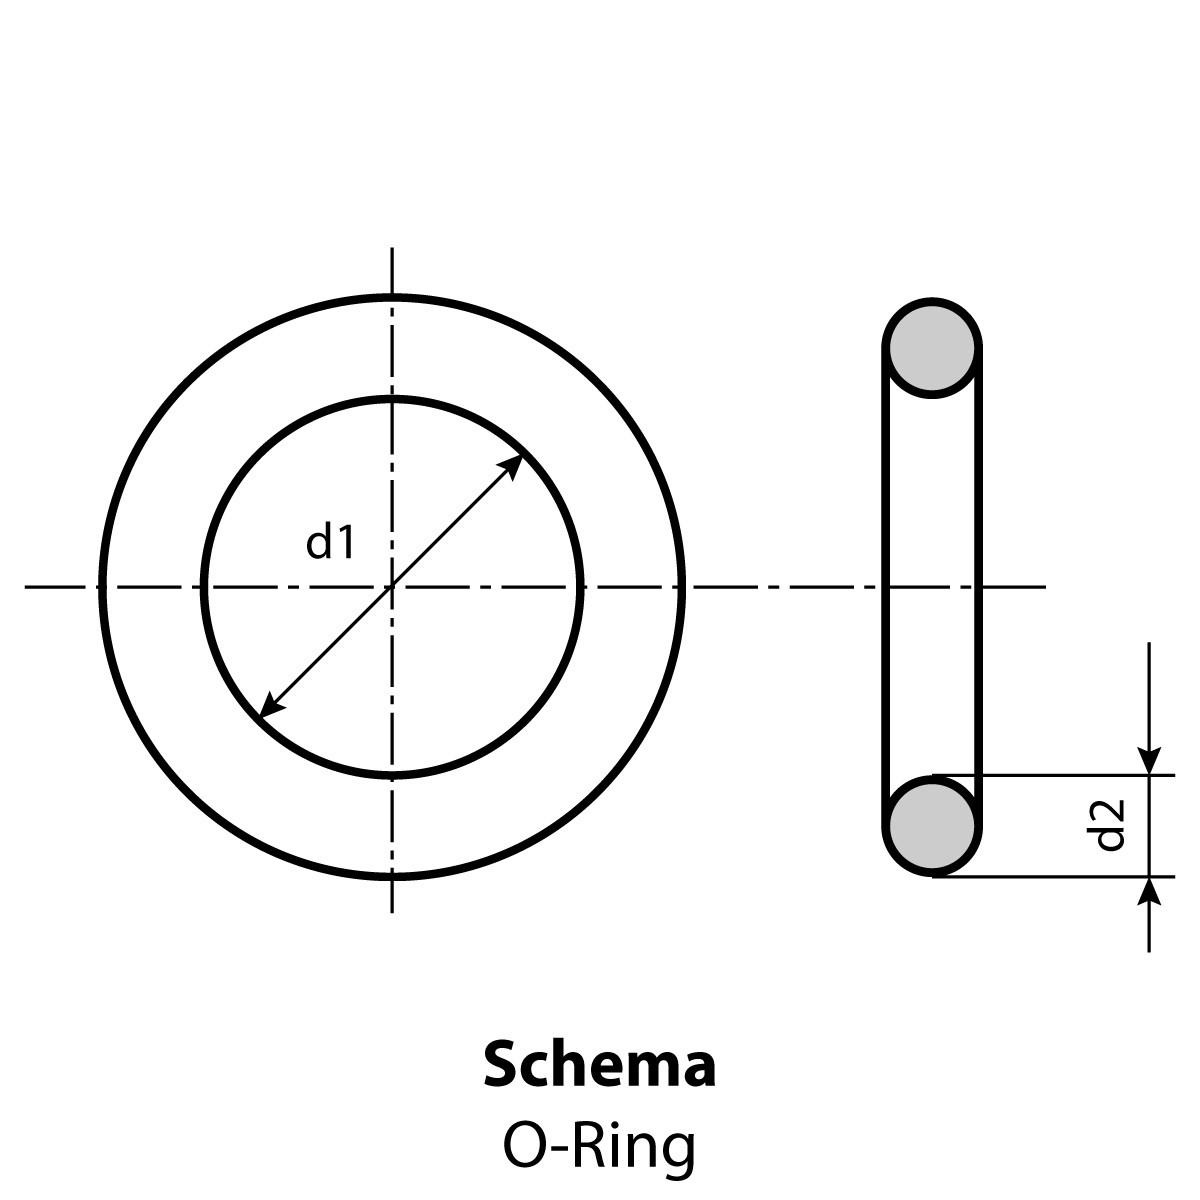 Dichtring / O-Ring 53 x 1,5 mm FKM 80 schwarz oder braun